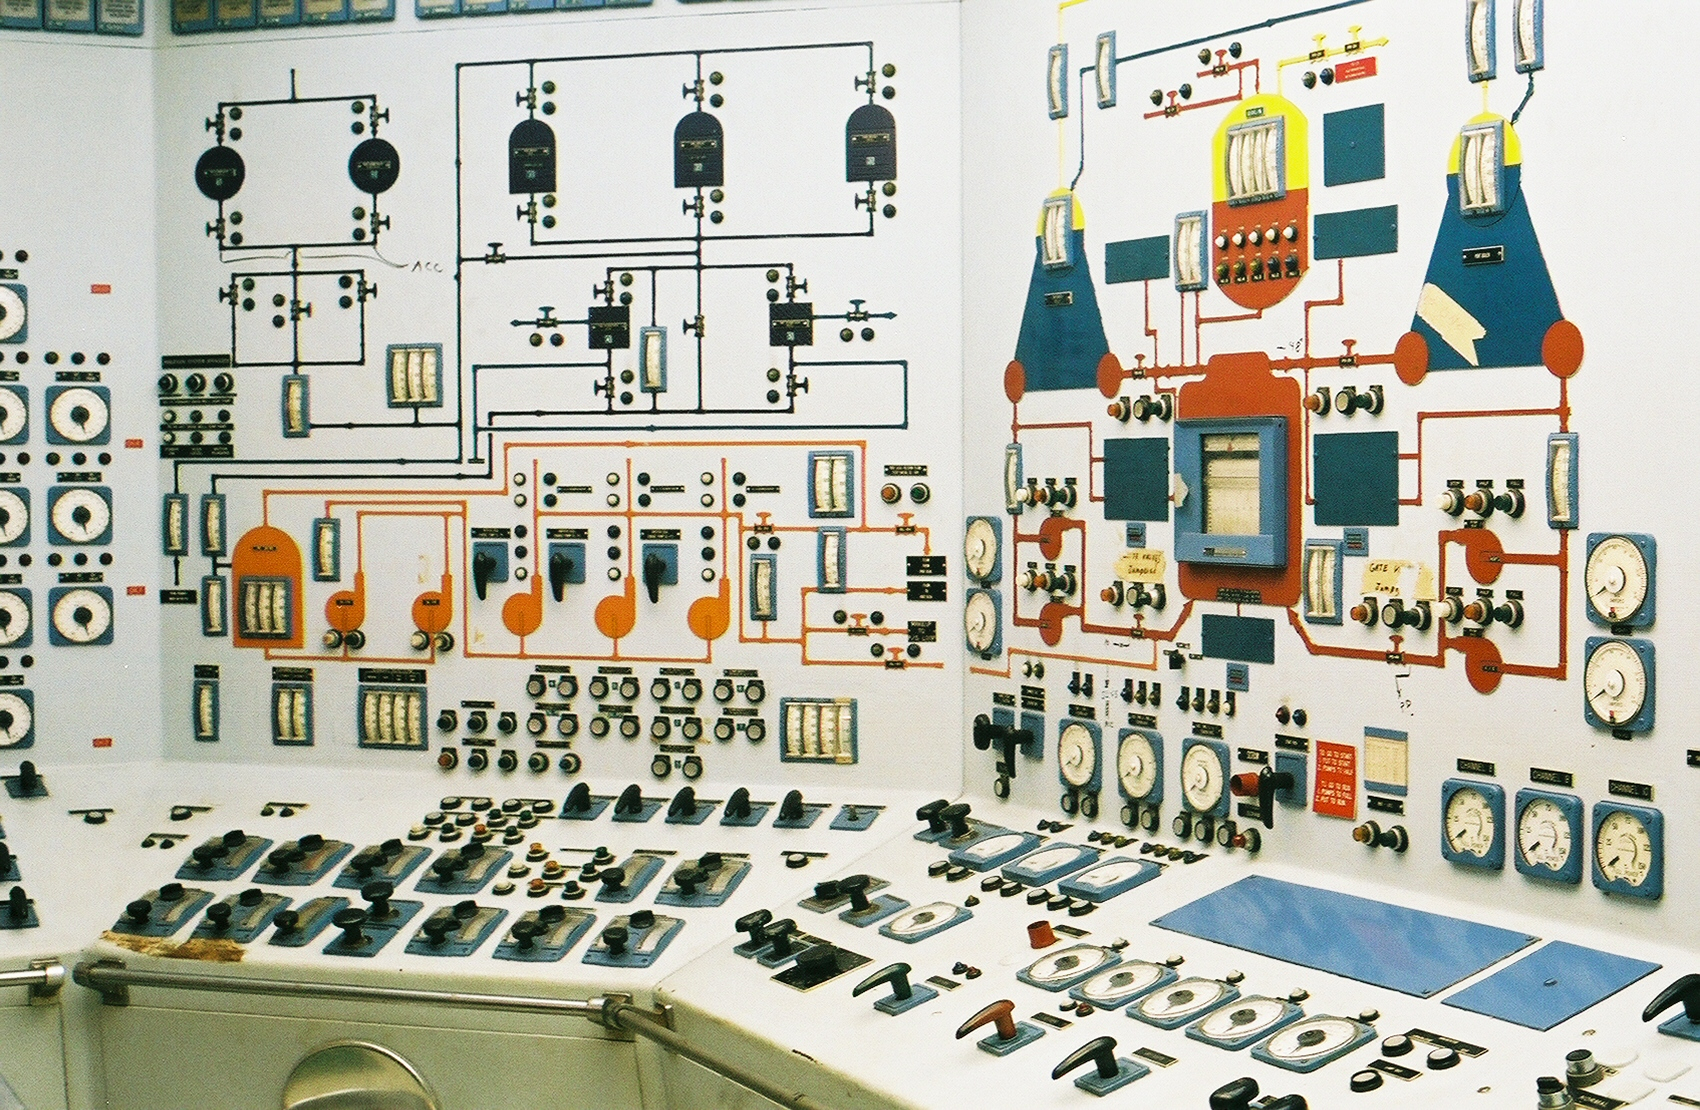 Nuclear_Ship_Savannah_-_Reactor_Control_Room_-_Center_and_Left_Panels